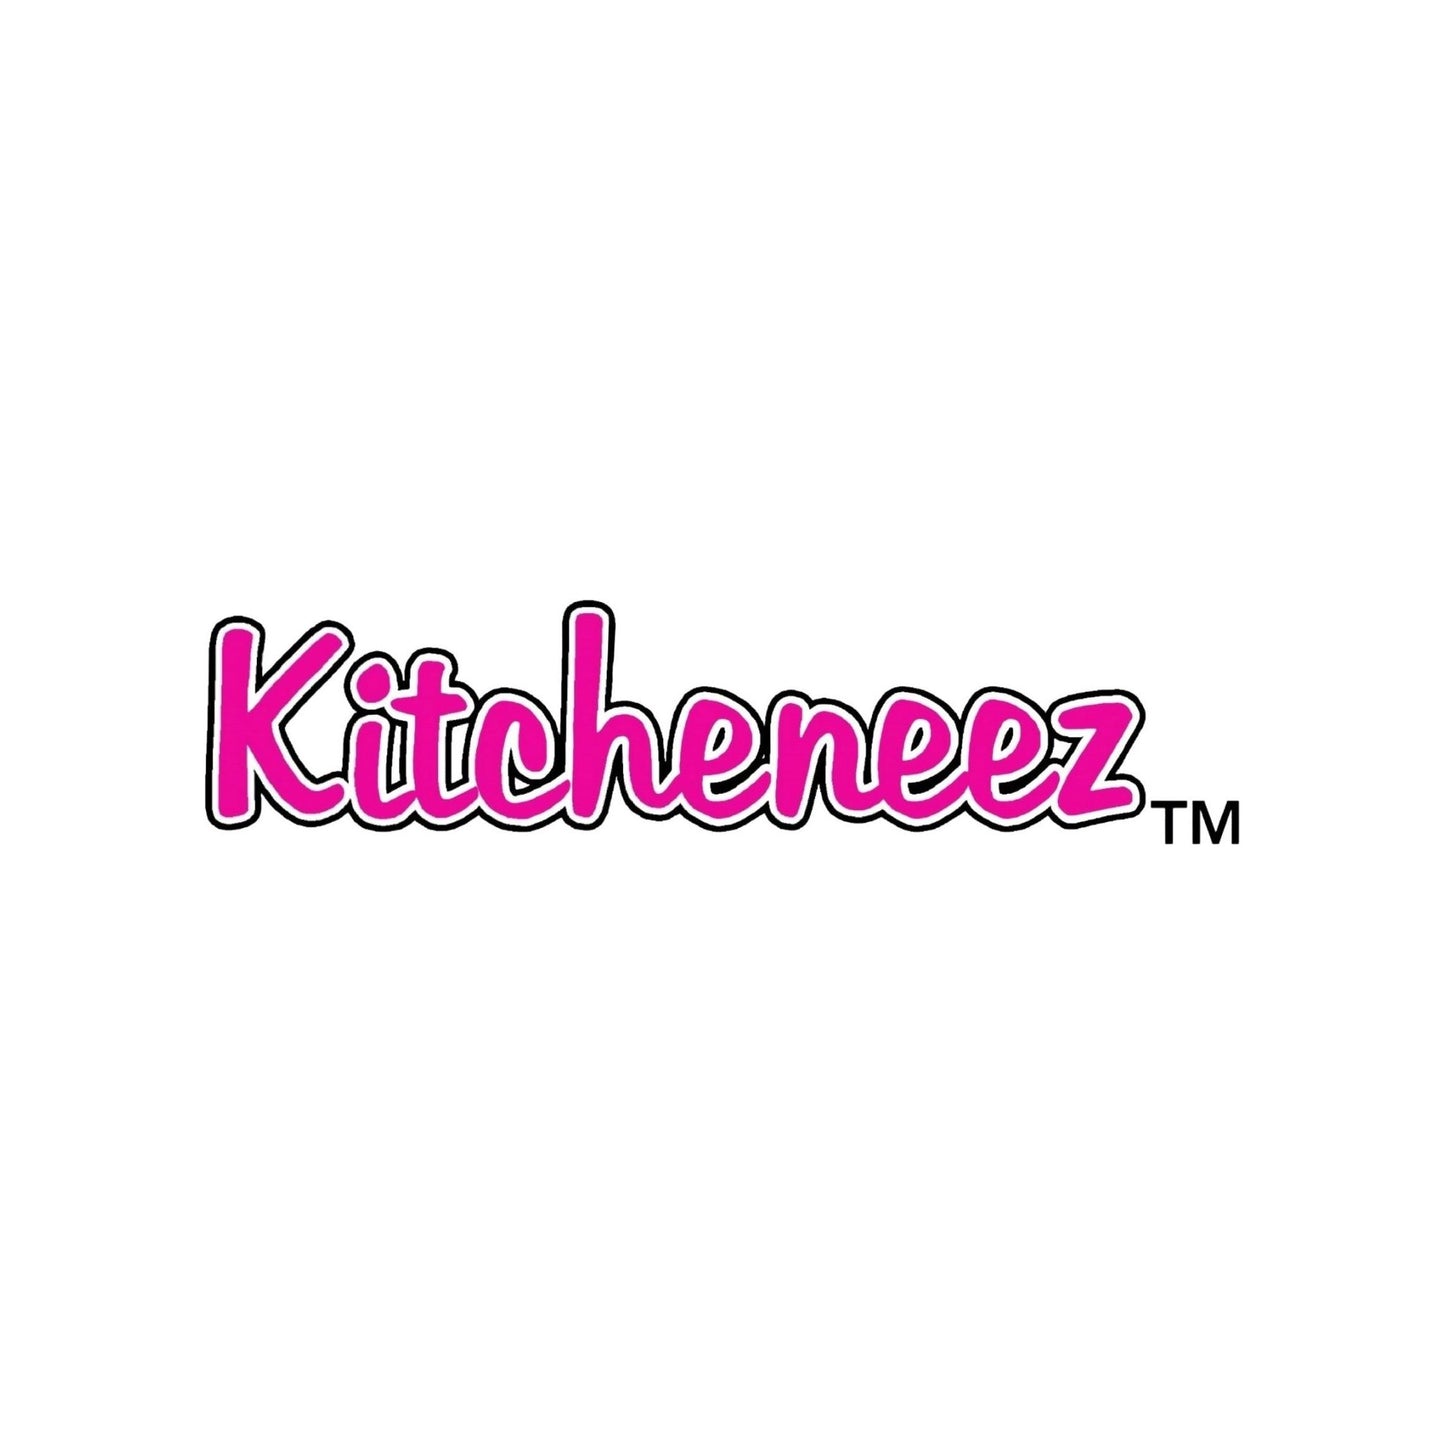 Become a Sales Representative- $55 bi-yearly - Kitcheneez Mixes & More!